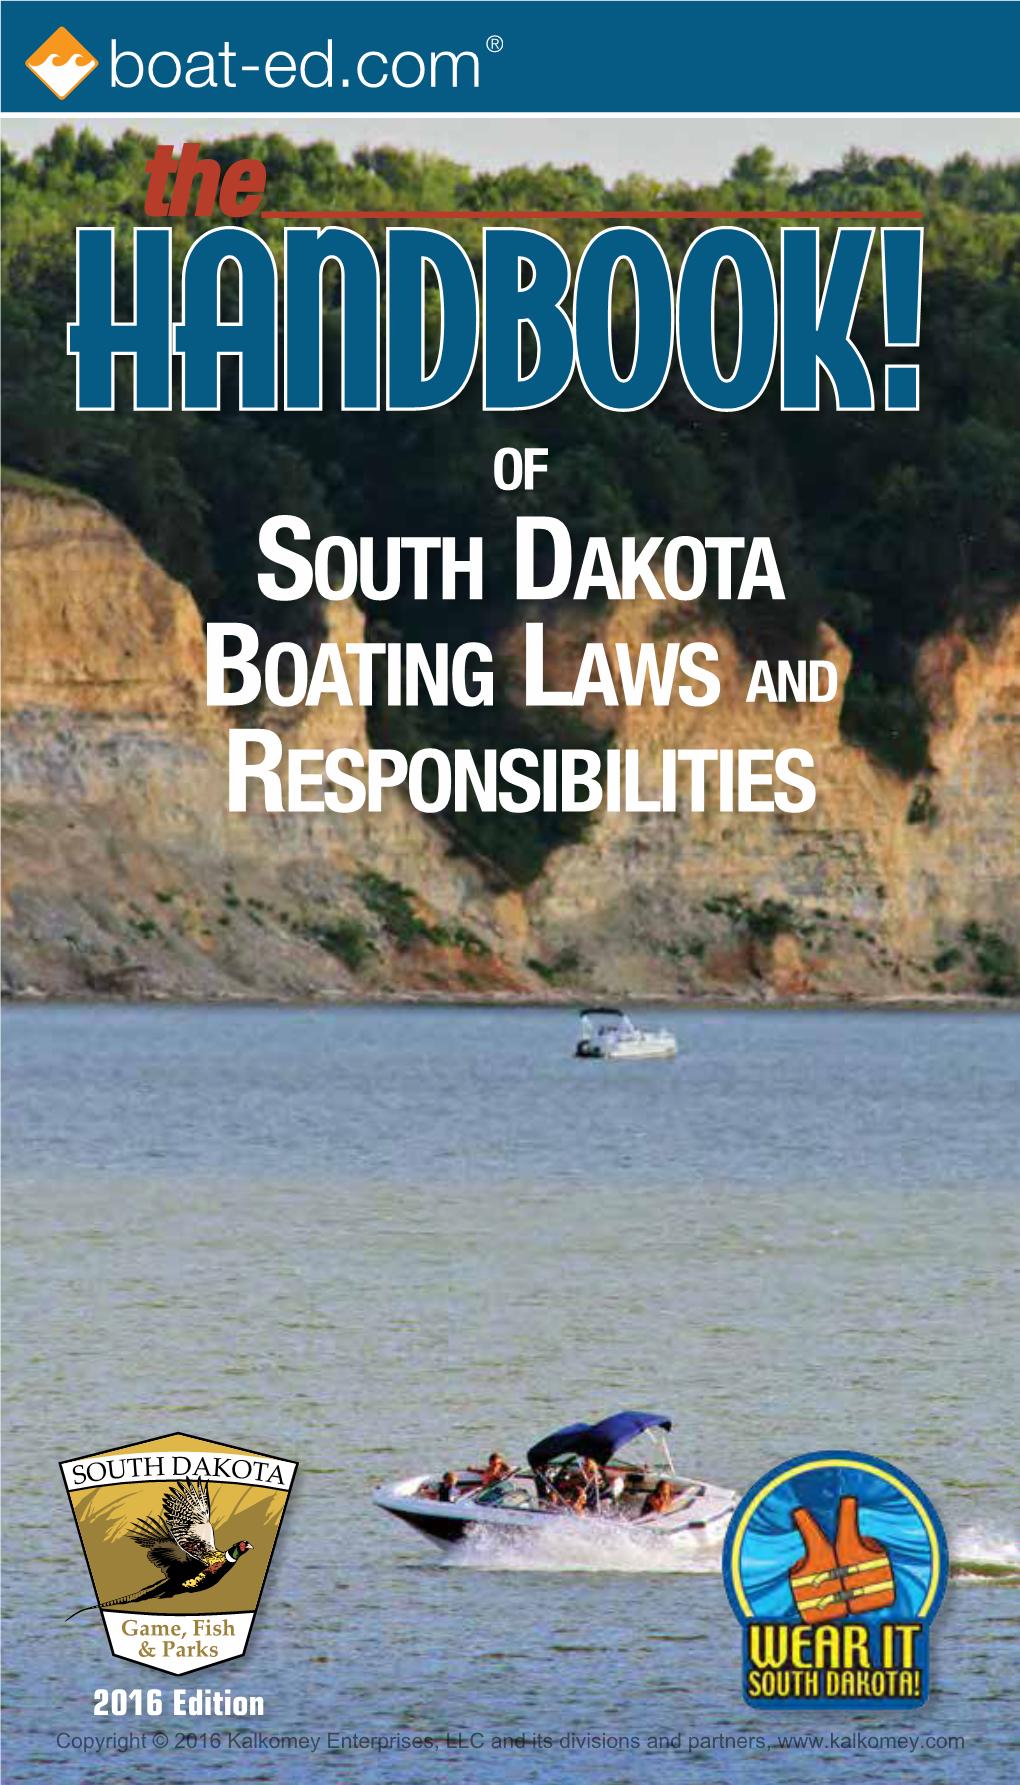 South Dakota Boating Laws and Responsibilities